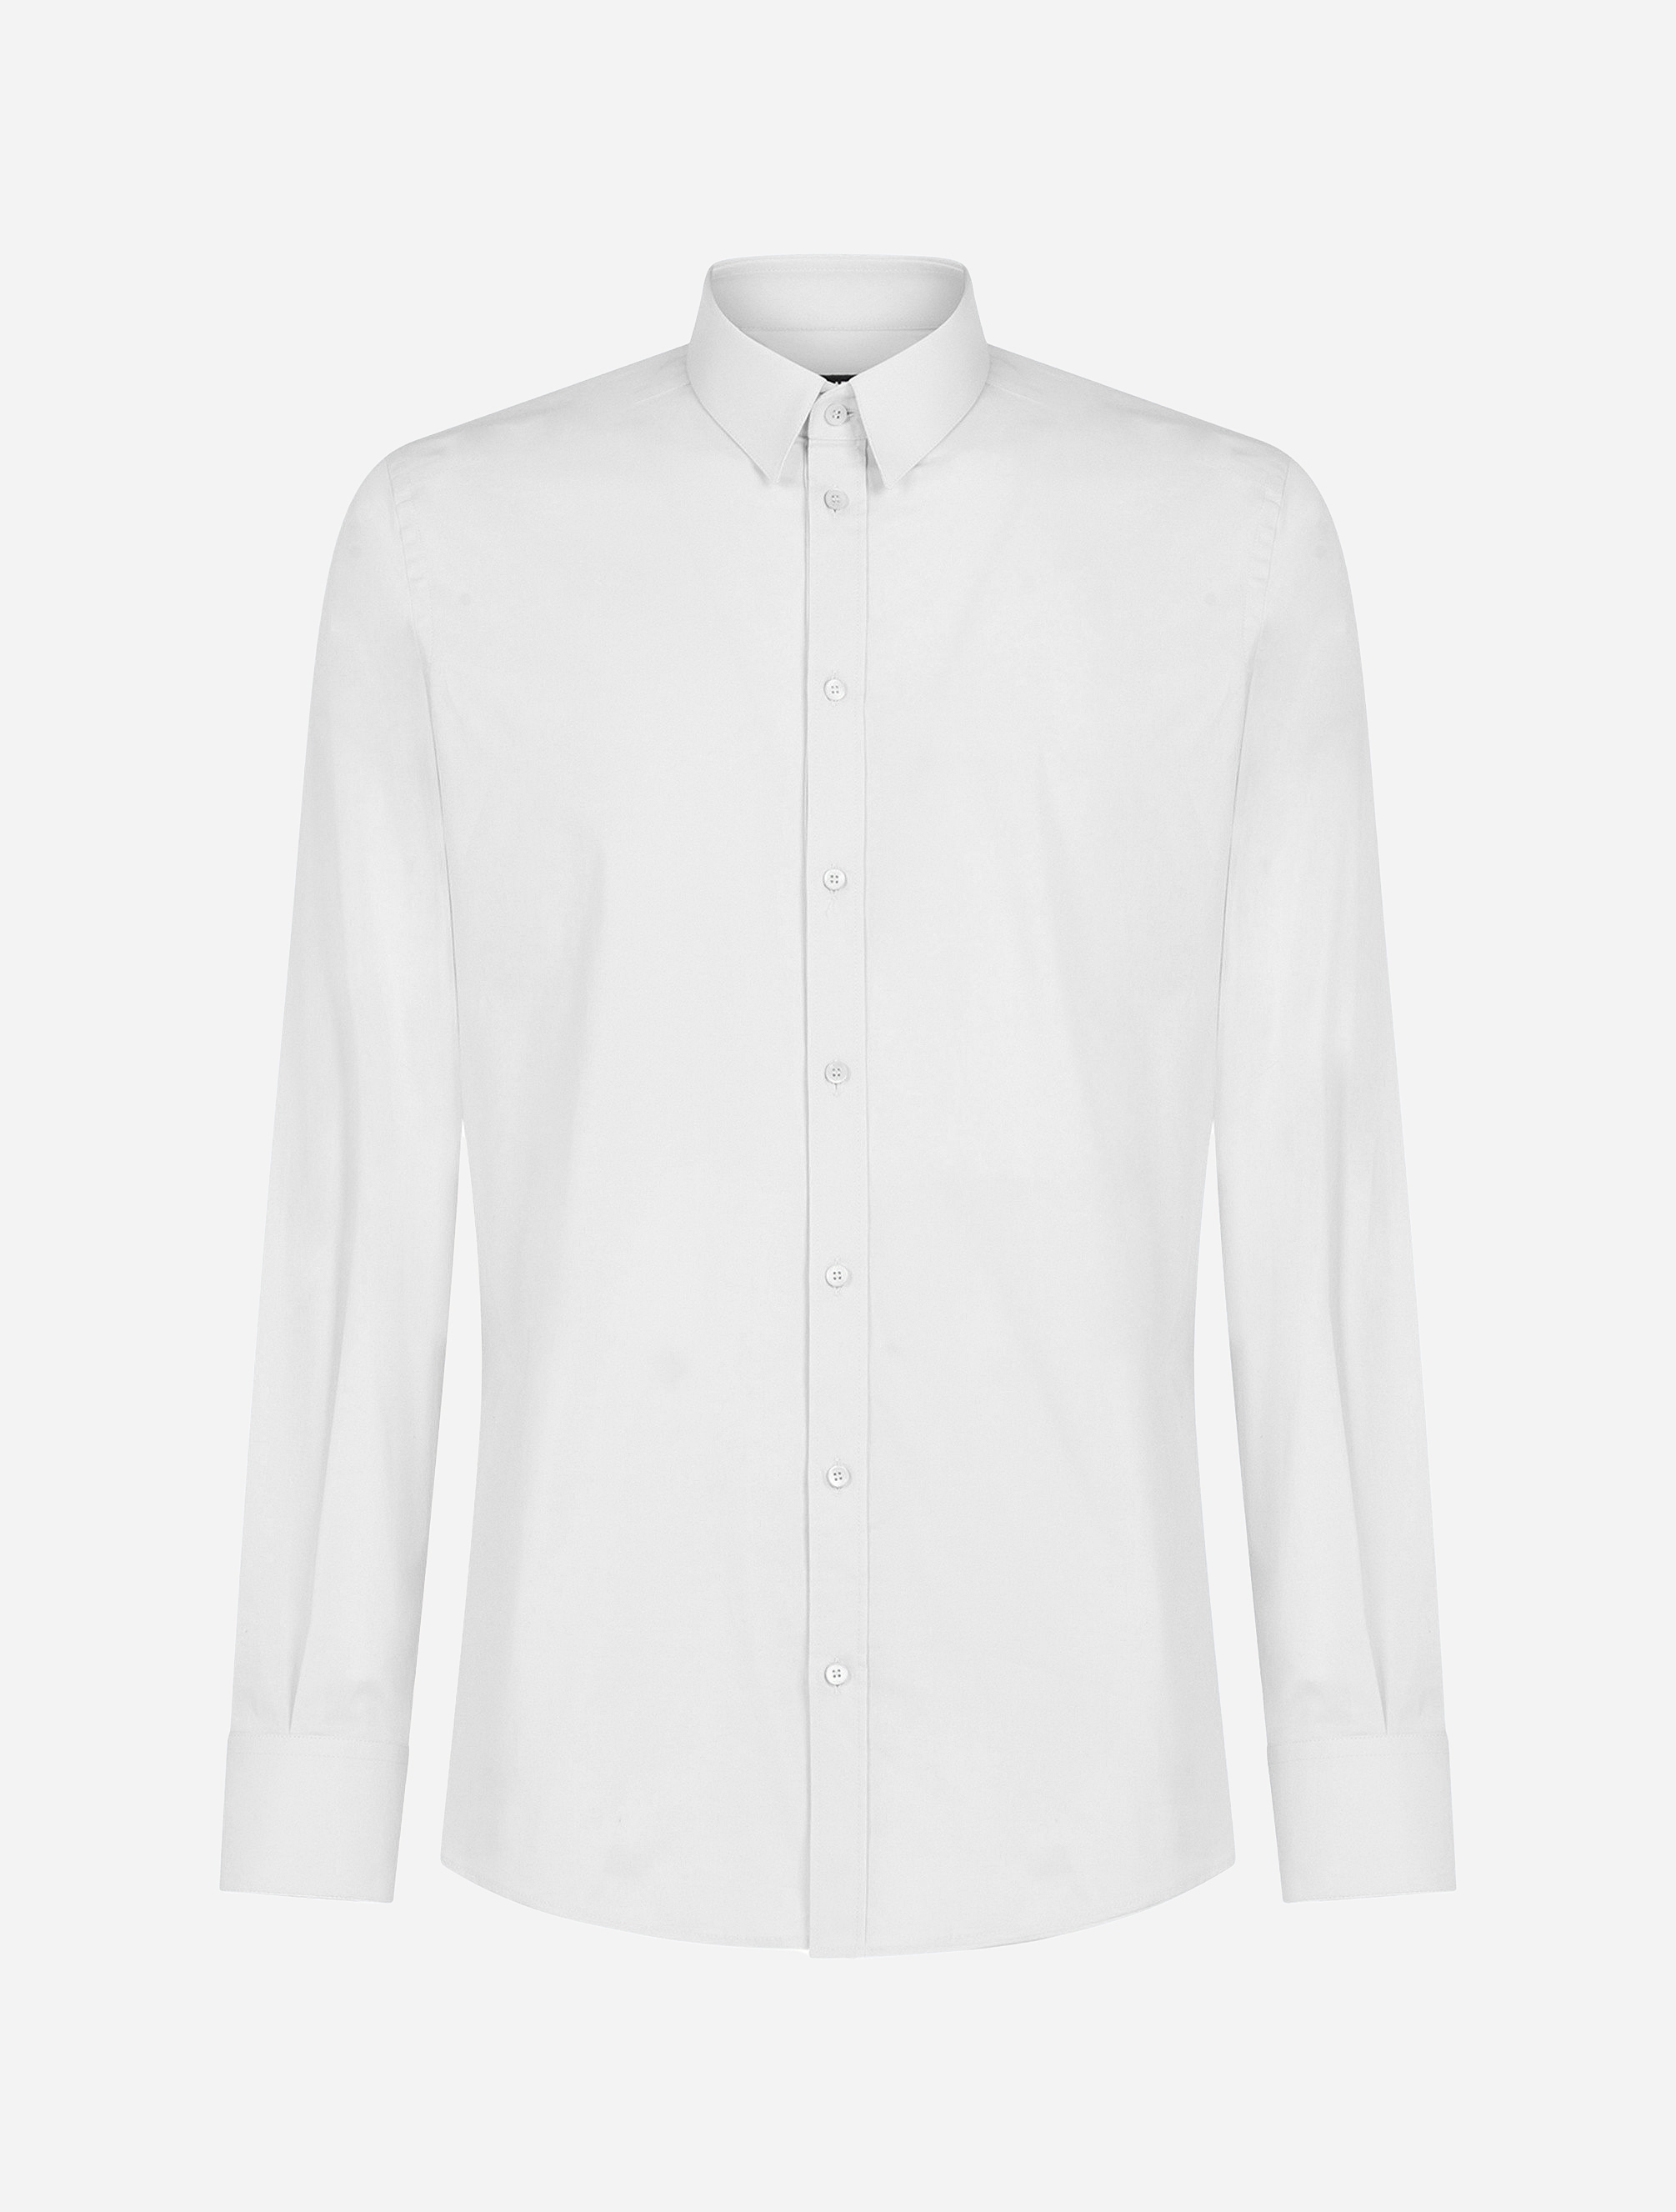 Shirt in stretch cotton poplin in White